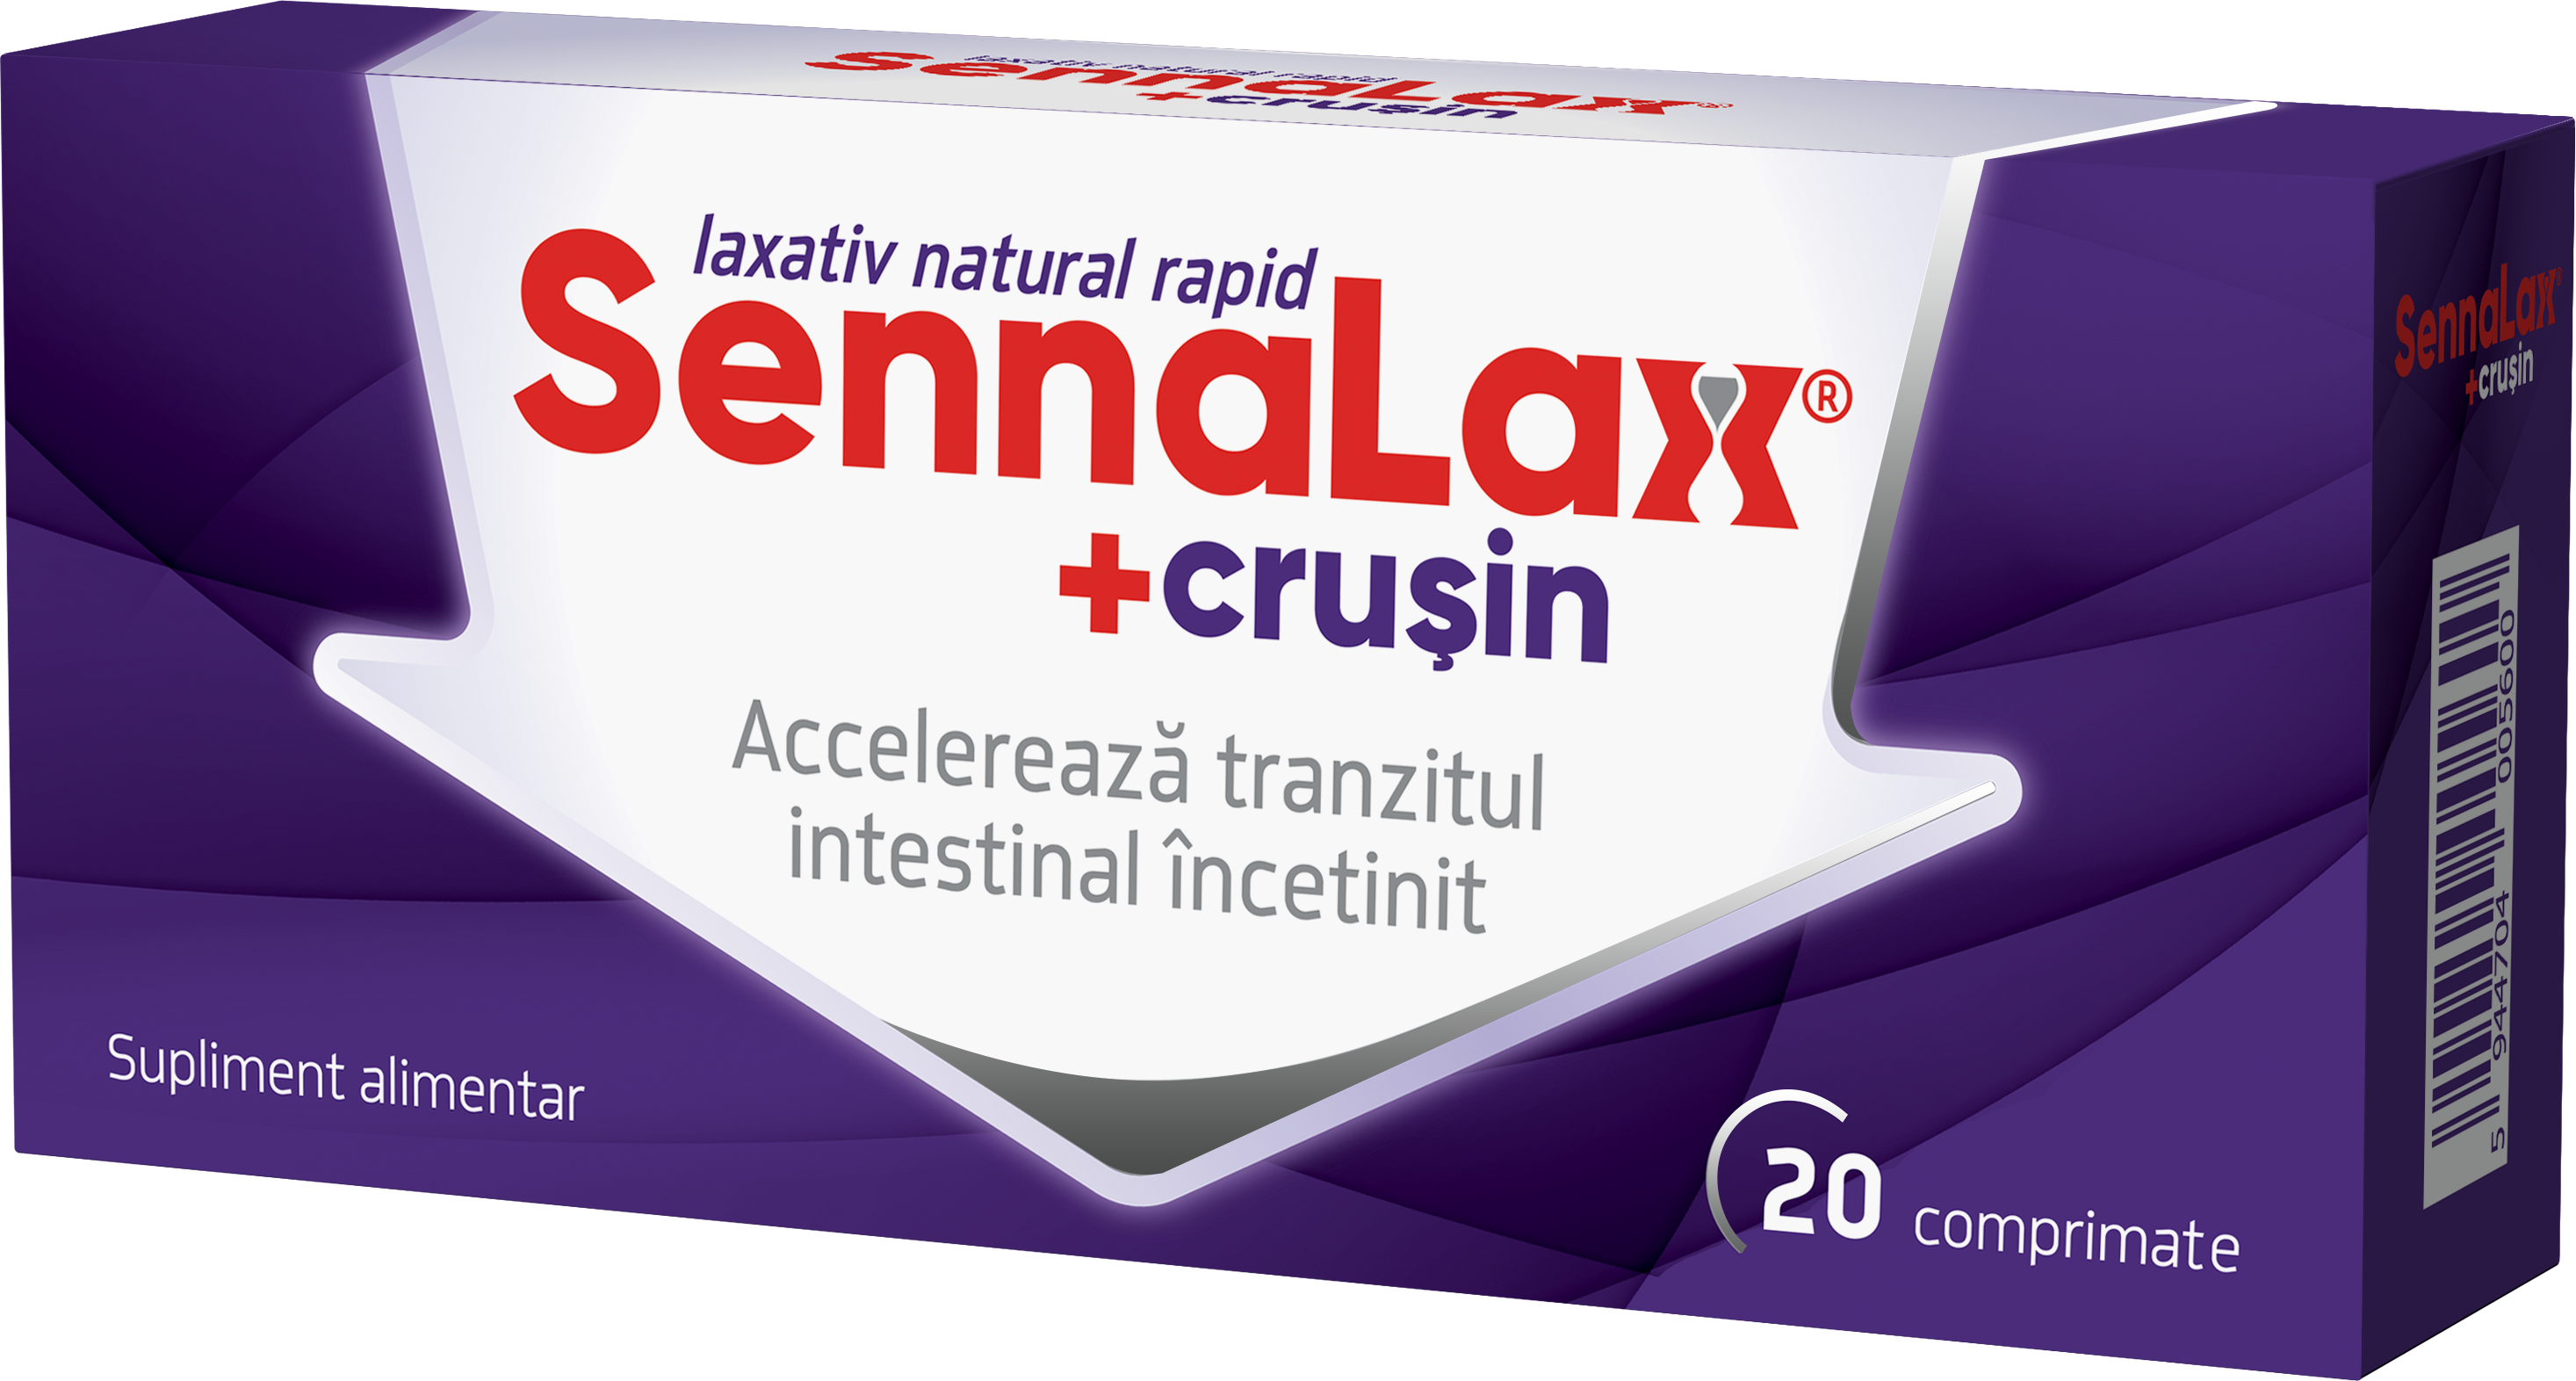 Constipatie - Sennalax plus crusin x 20 comprimate, medik-on.ro